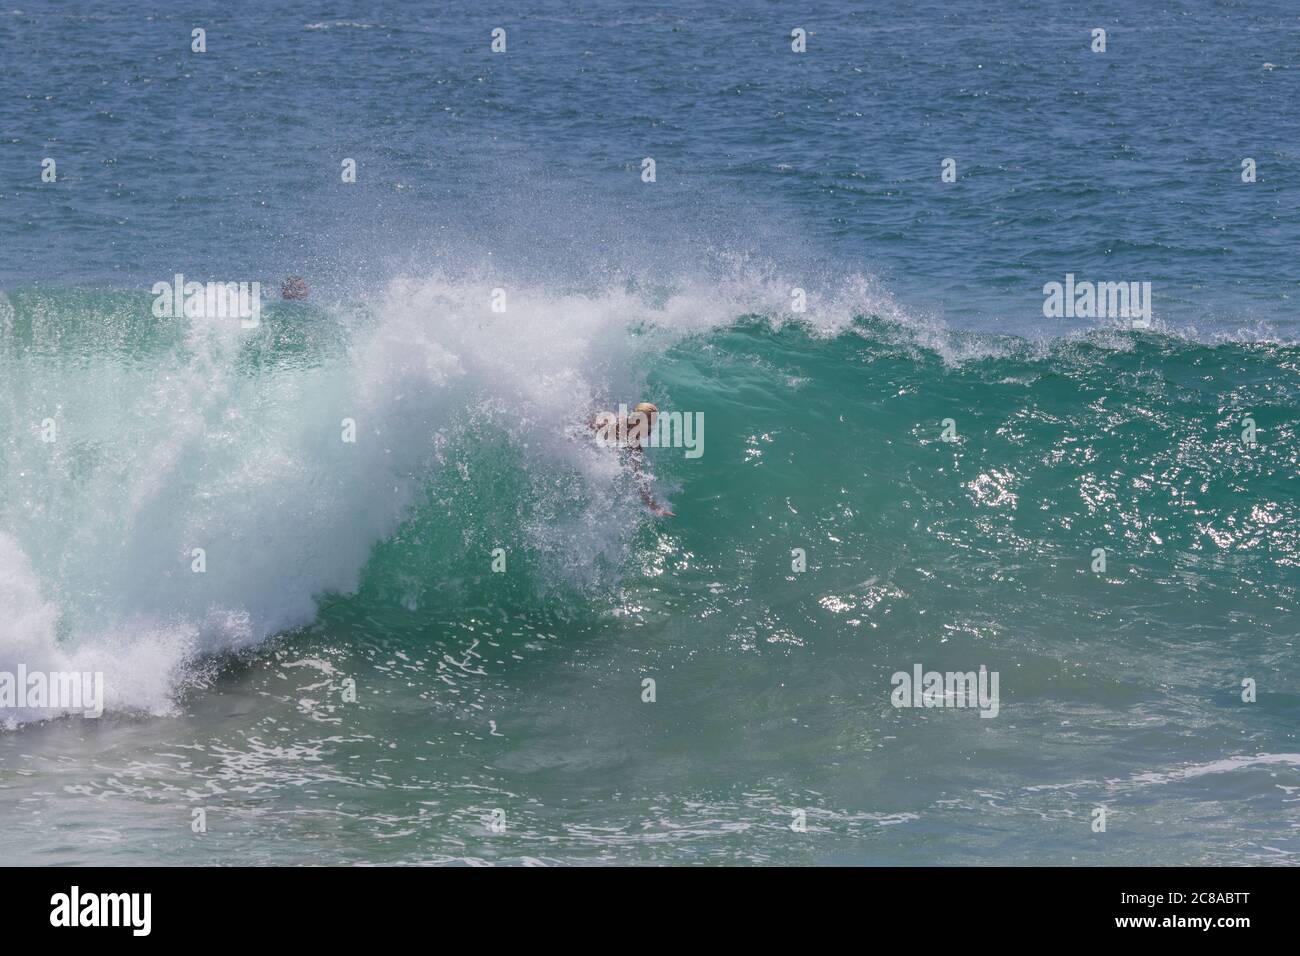 Bodysurfer bodysurfing The Wedge Newport Beach California USA Stock Photo